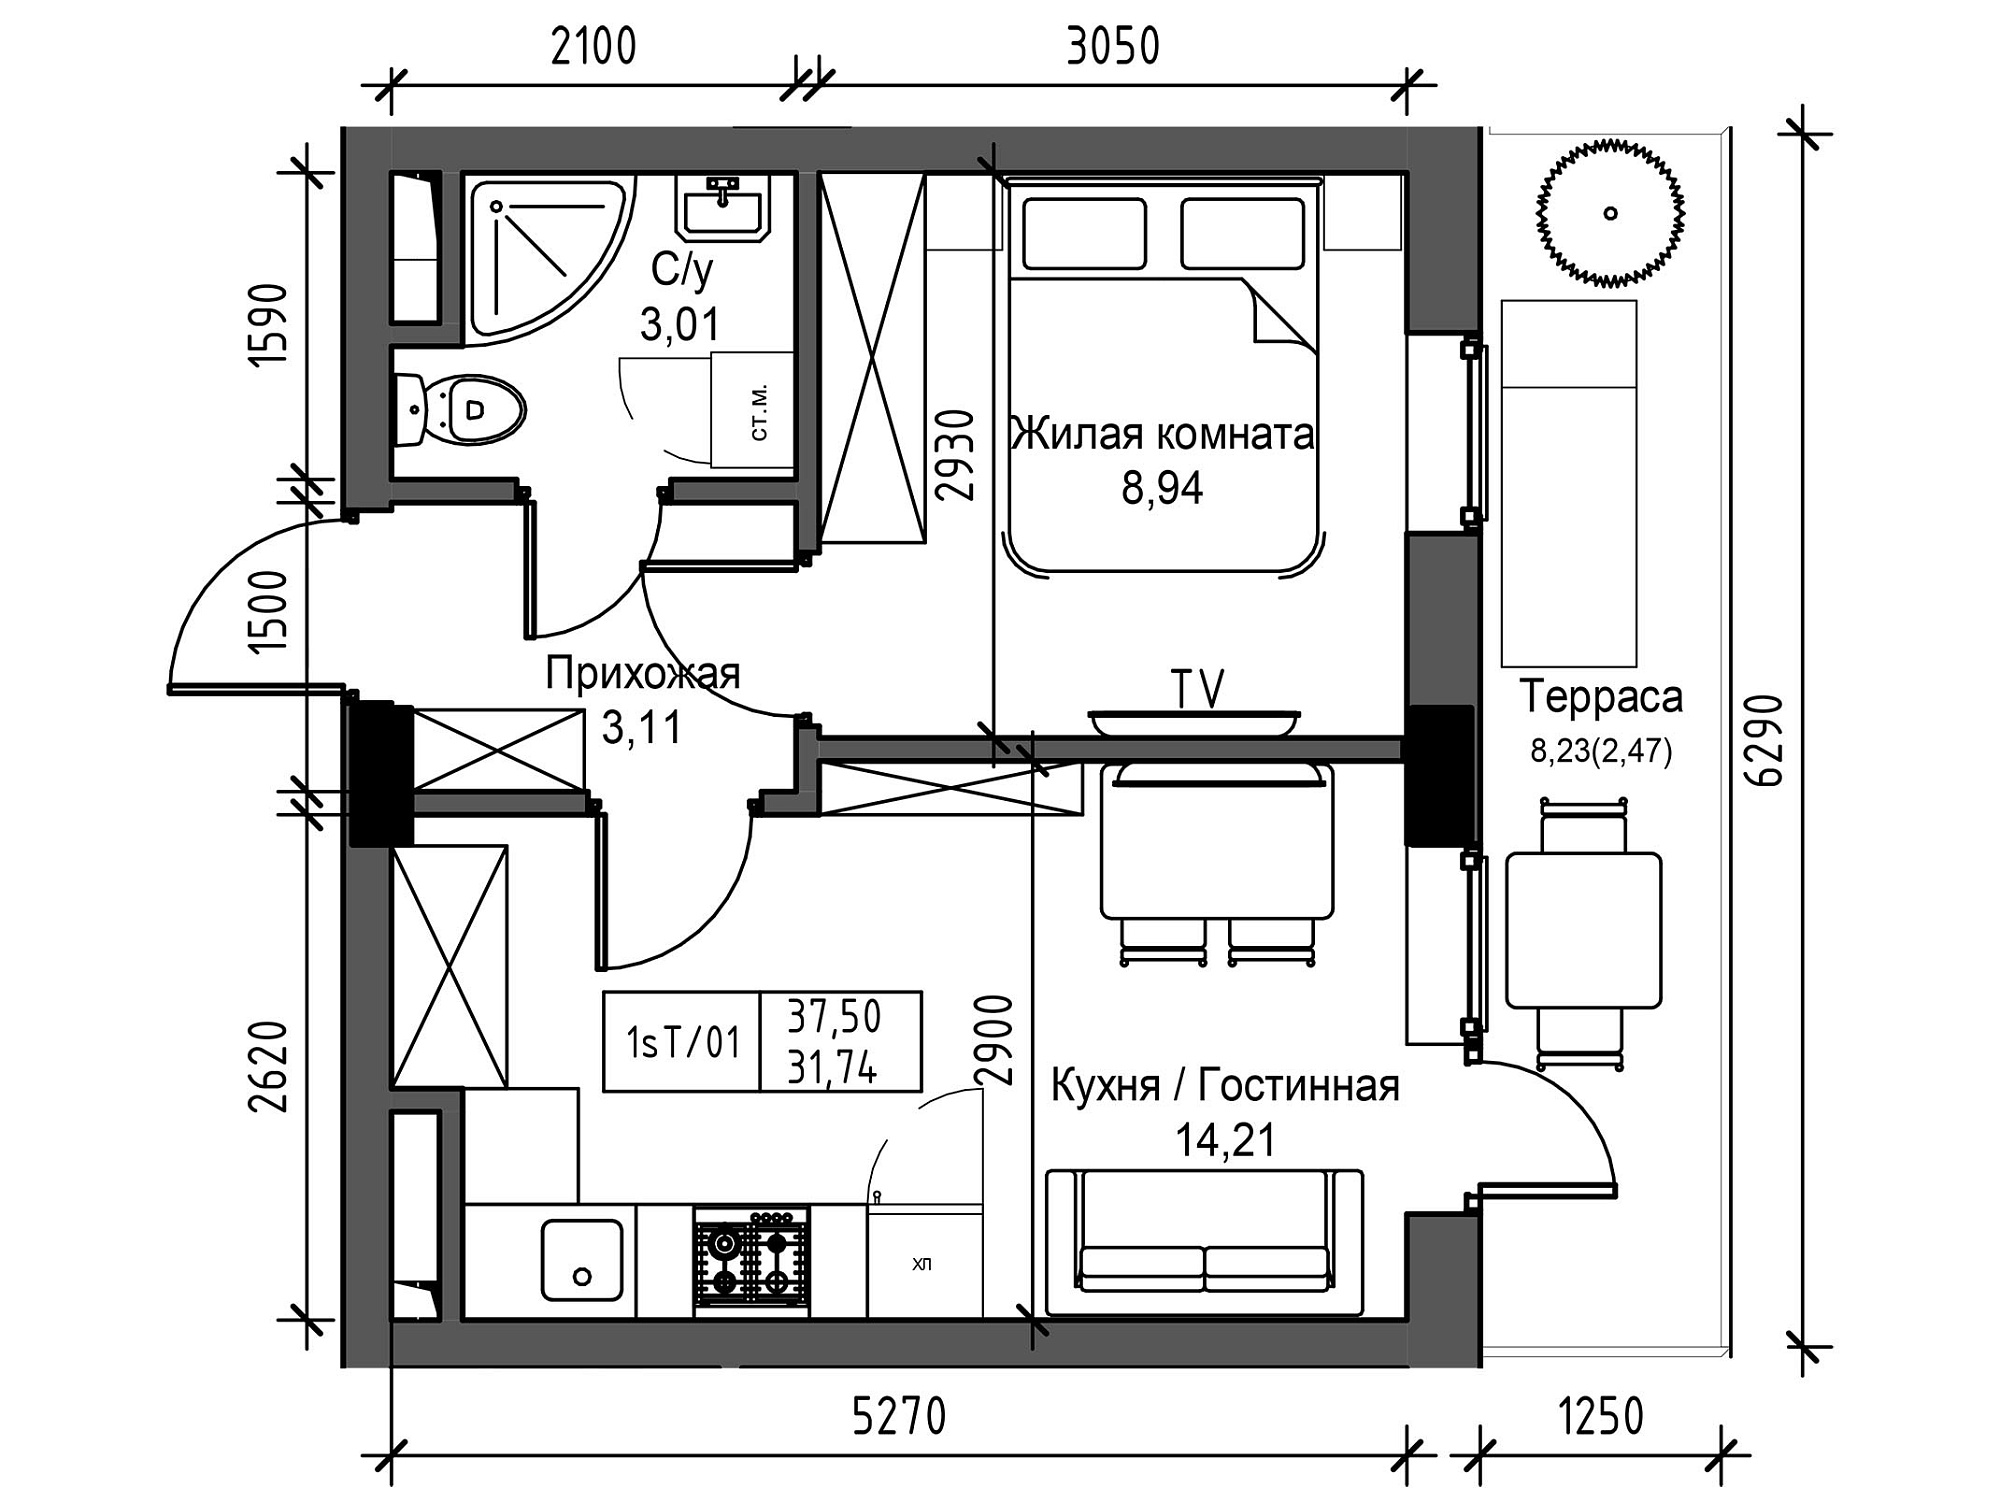 Планування 1-к квартира площею 31.74м2, UM-003-04/0022.